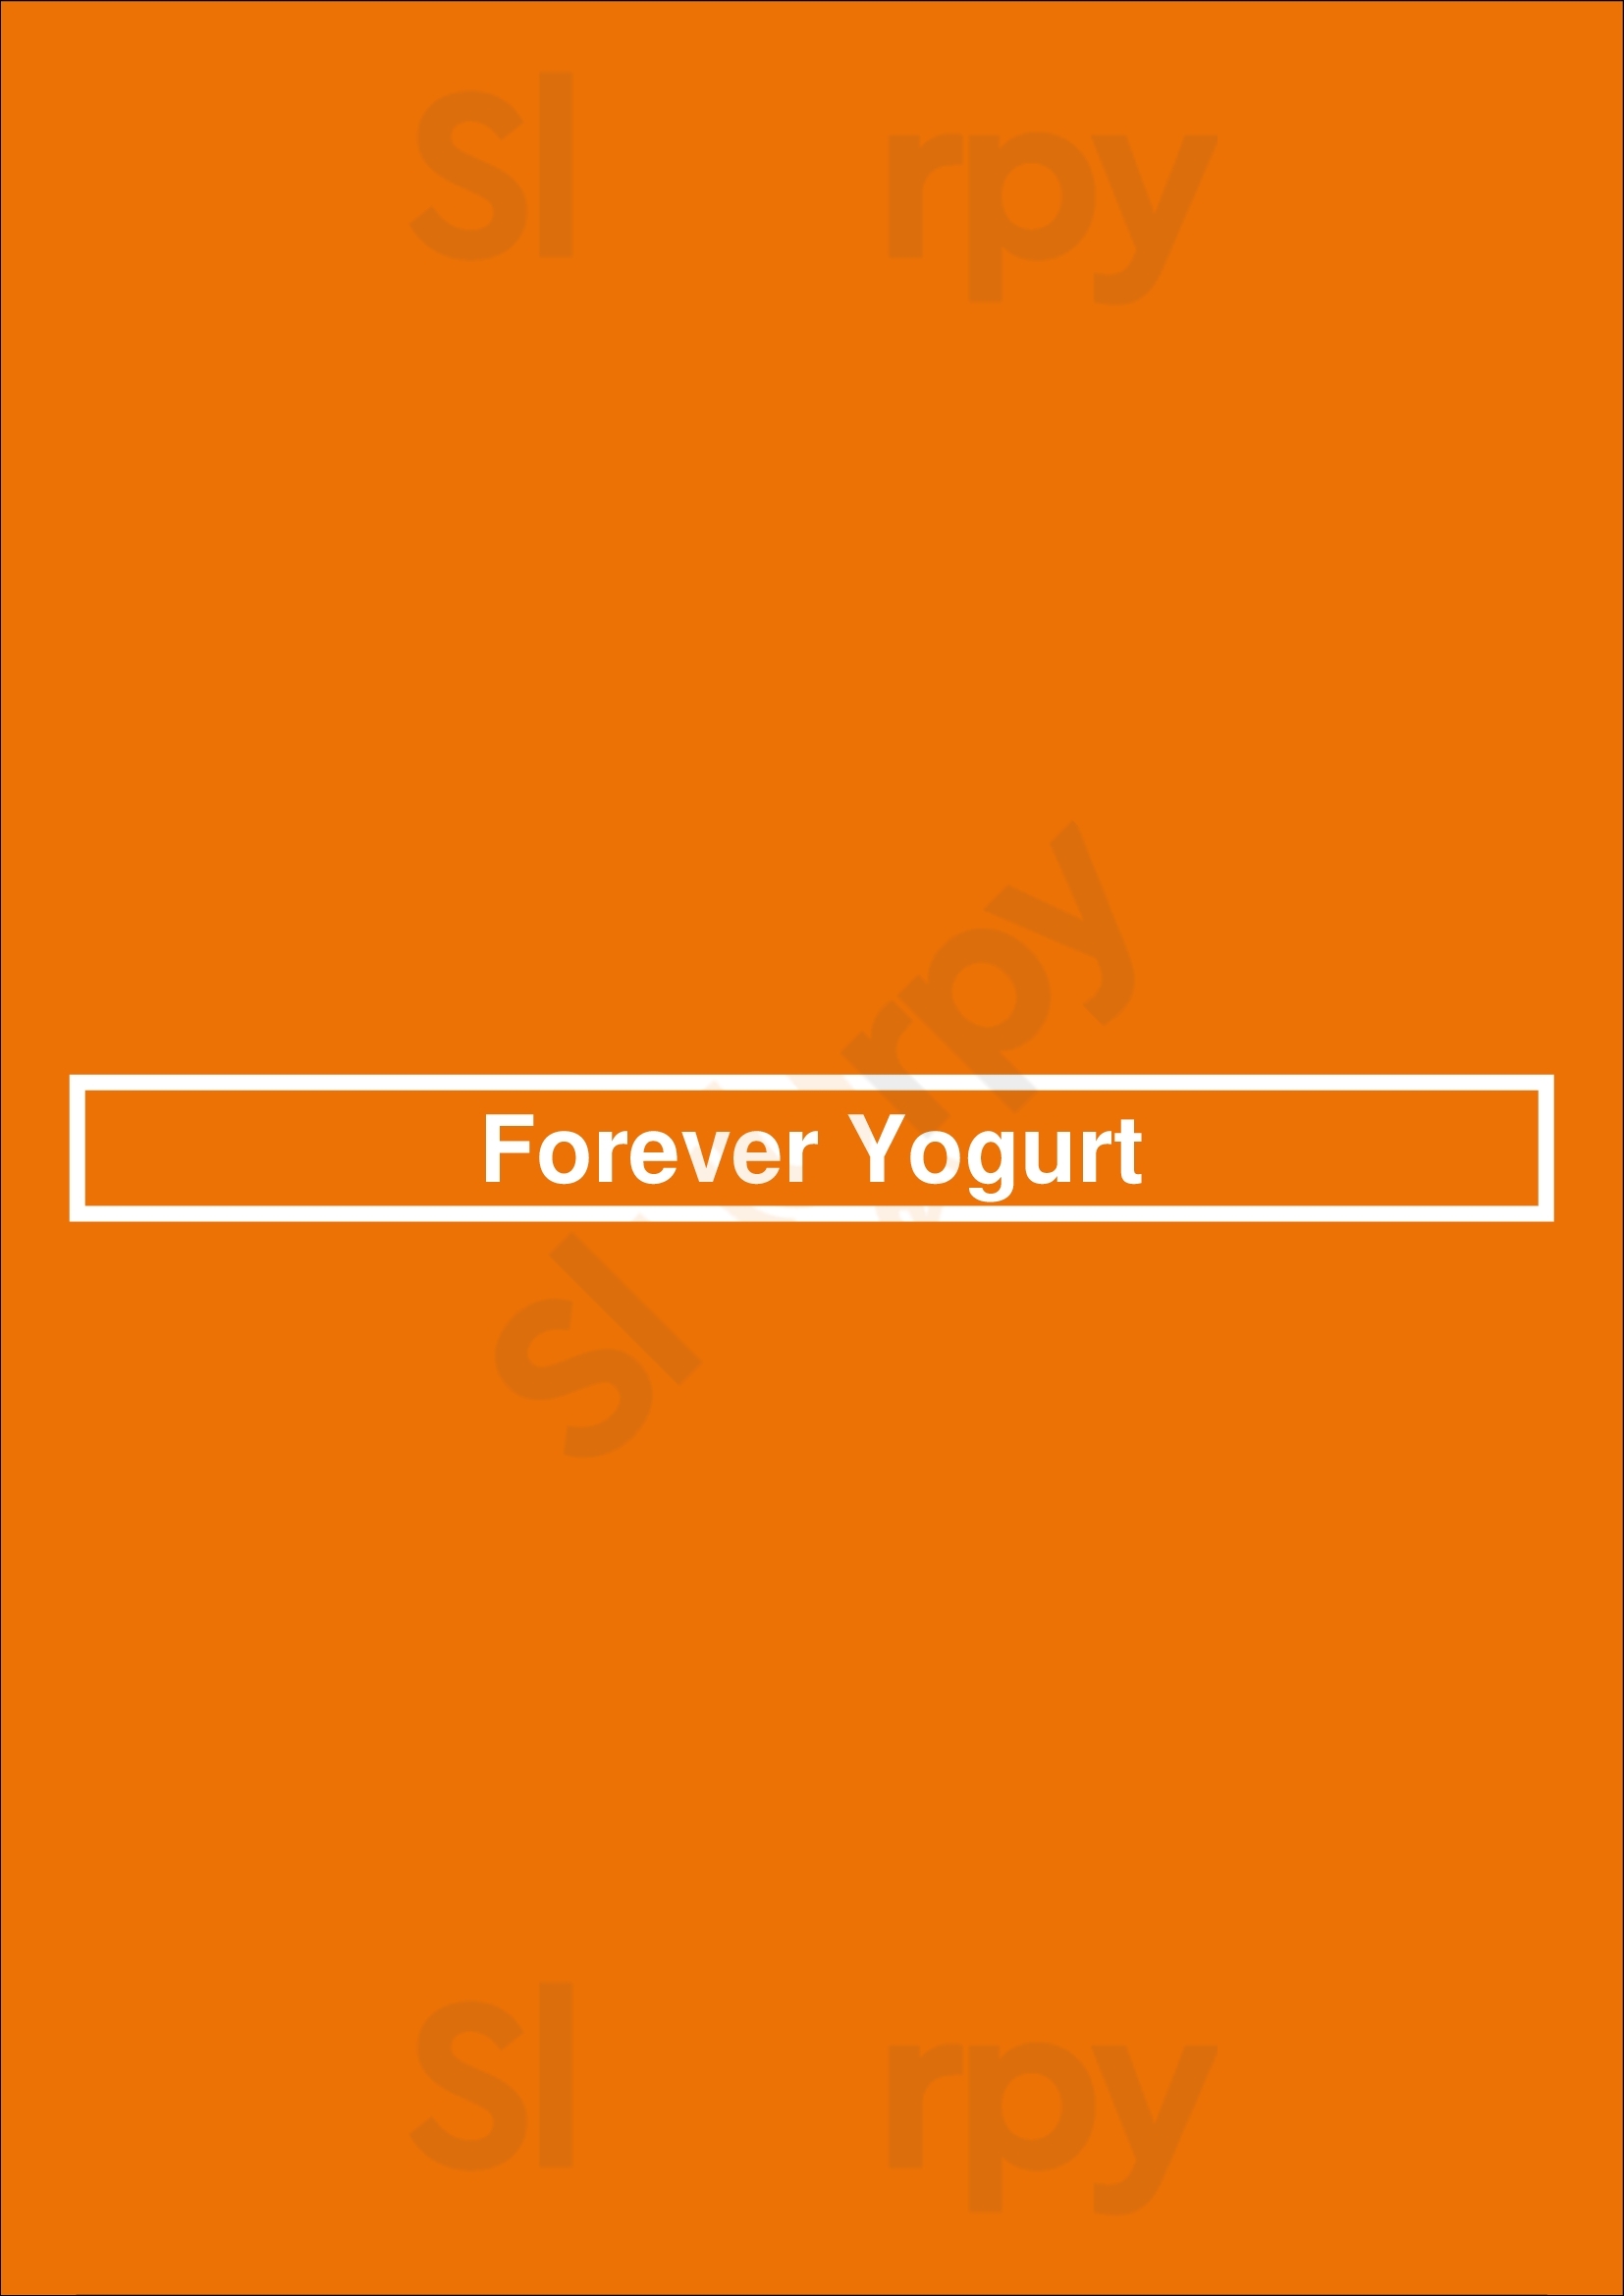 Forever Yogurt Chicago Menu - 1